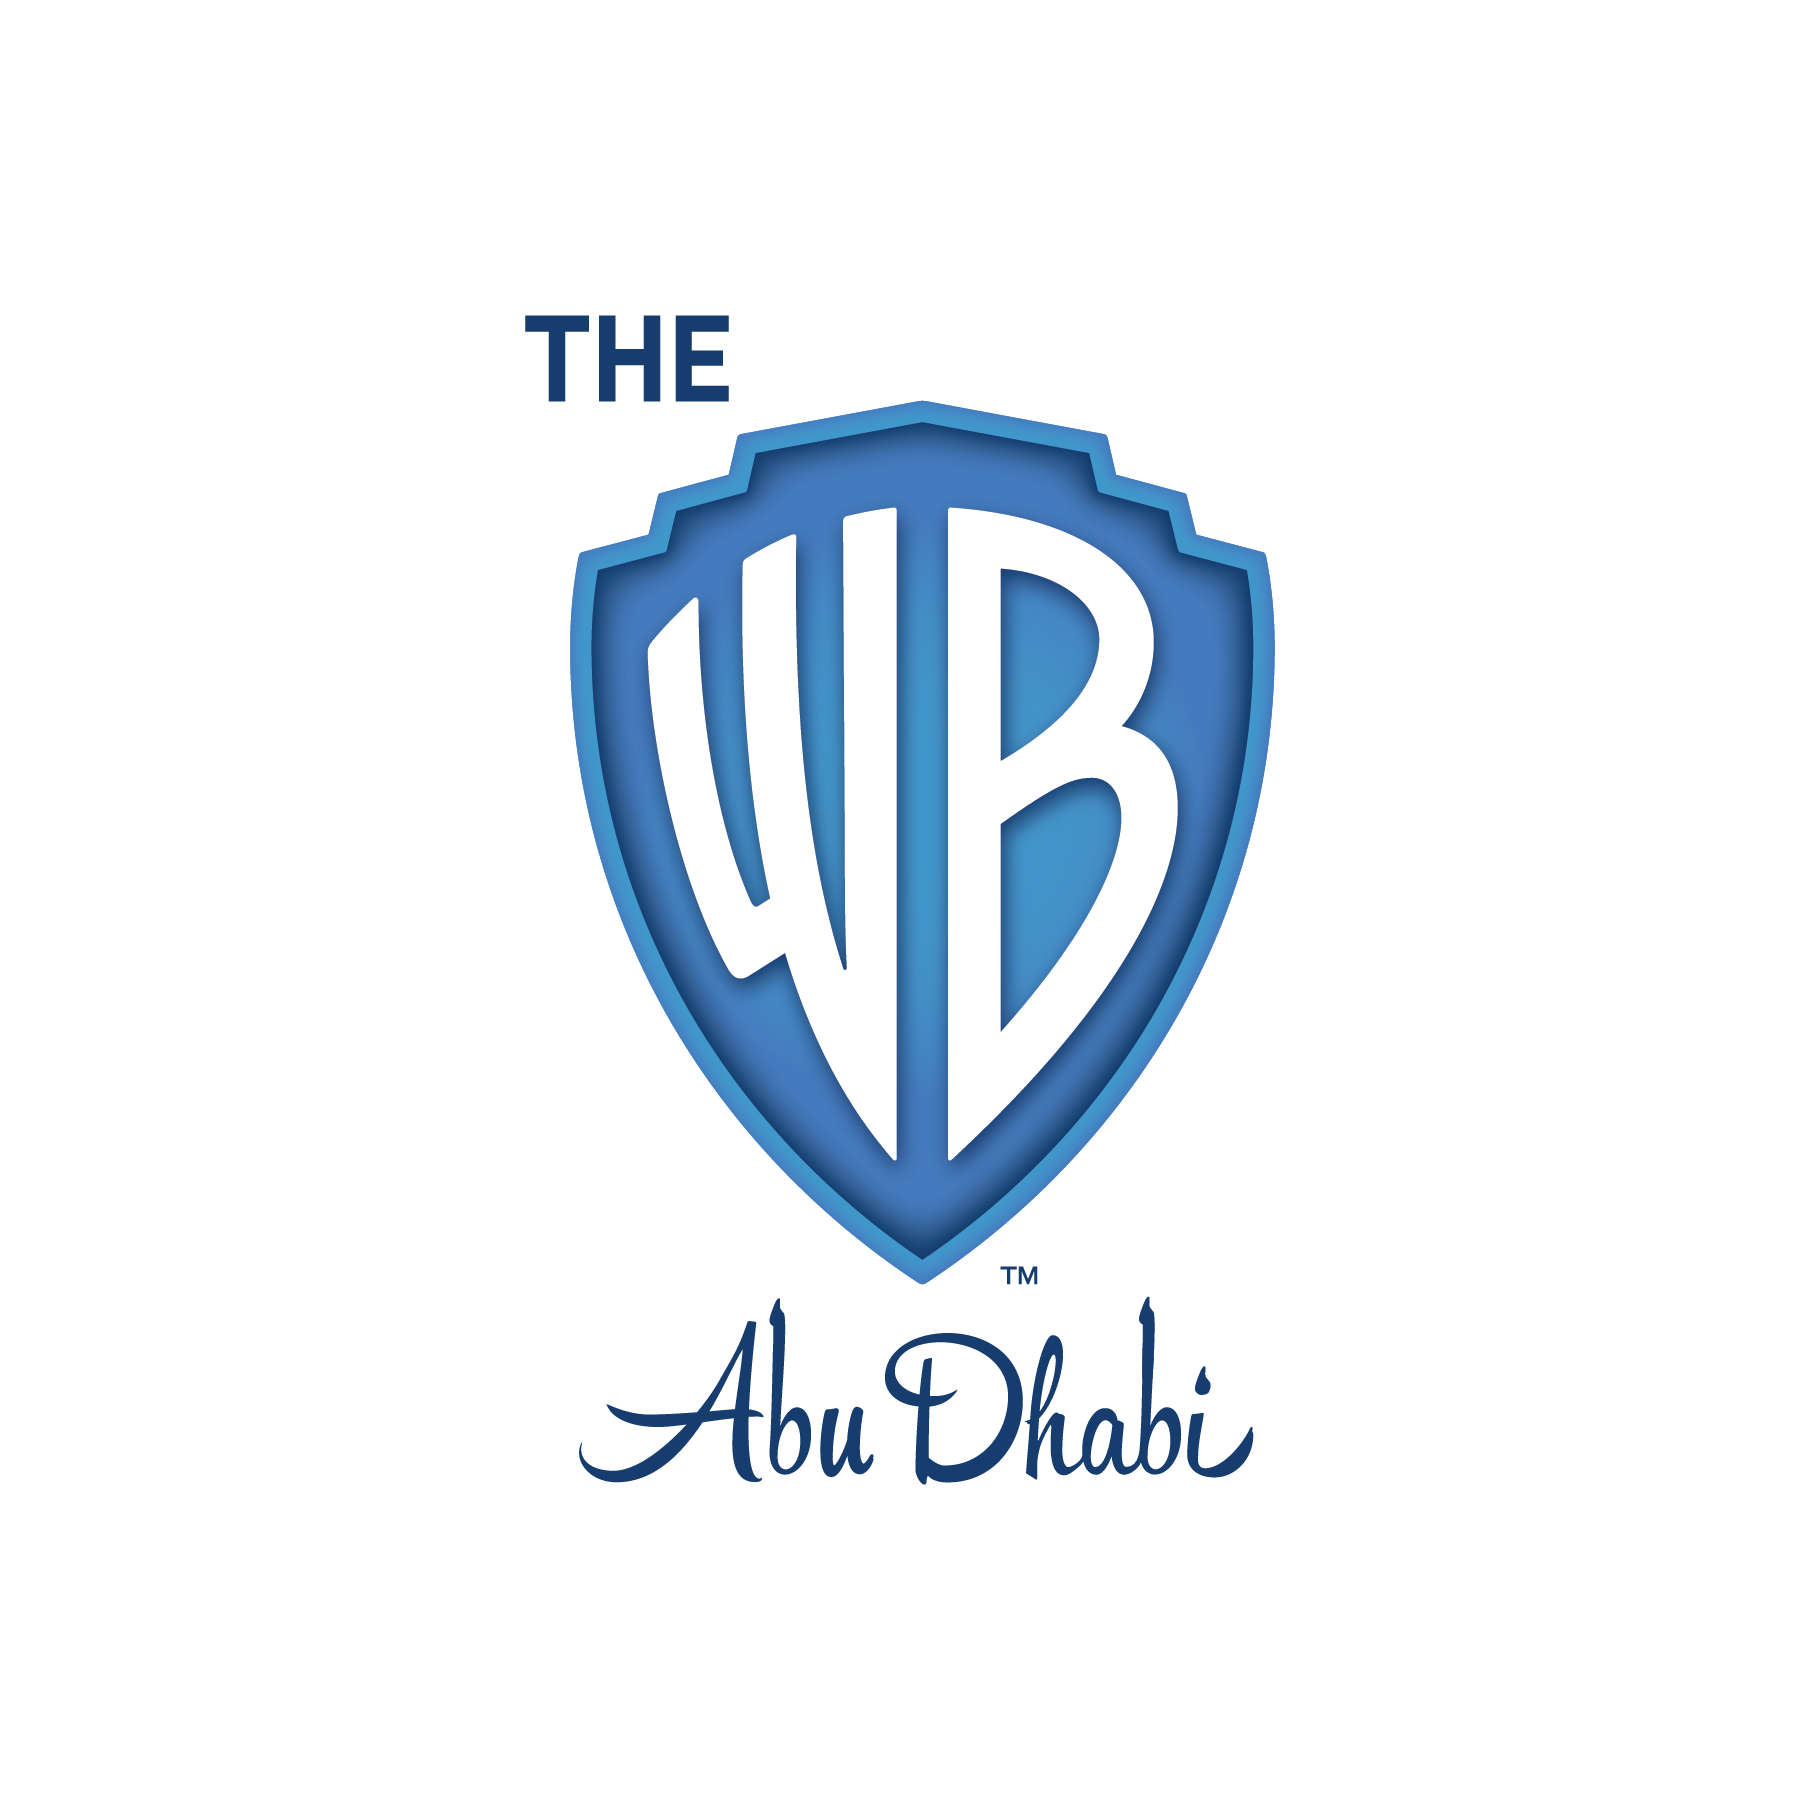 The Warner Brothers Hotel - Abudhabi 